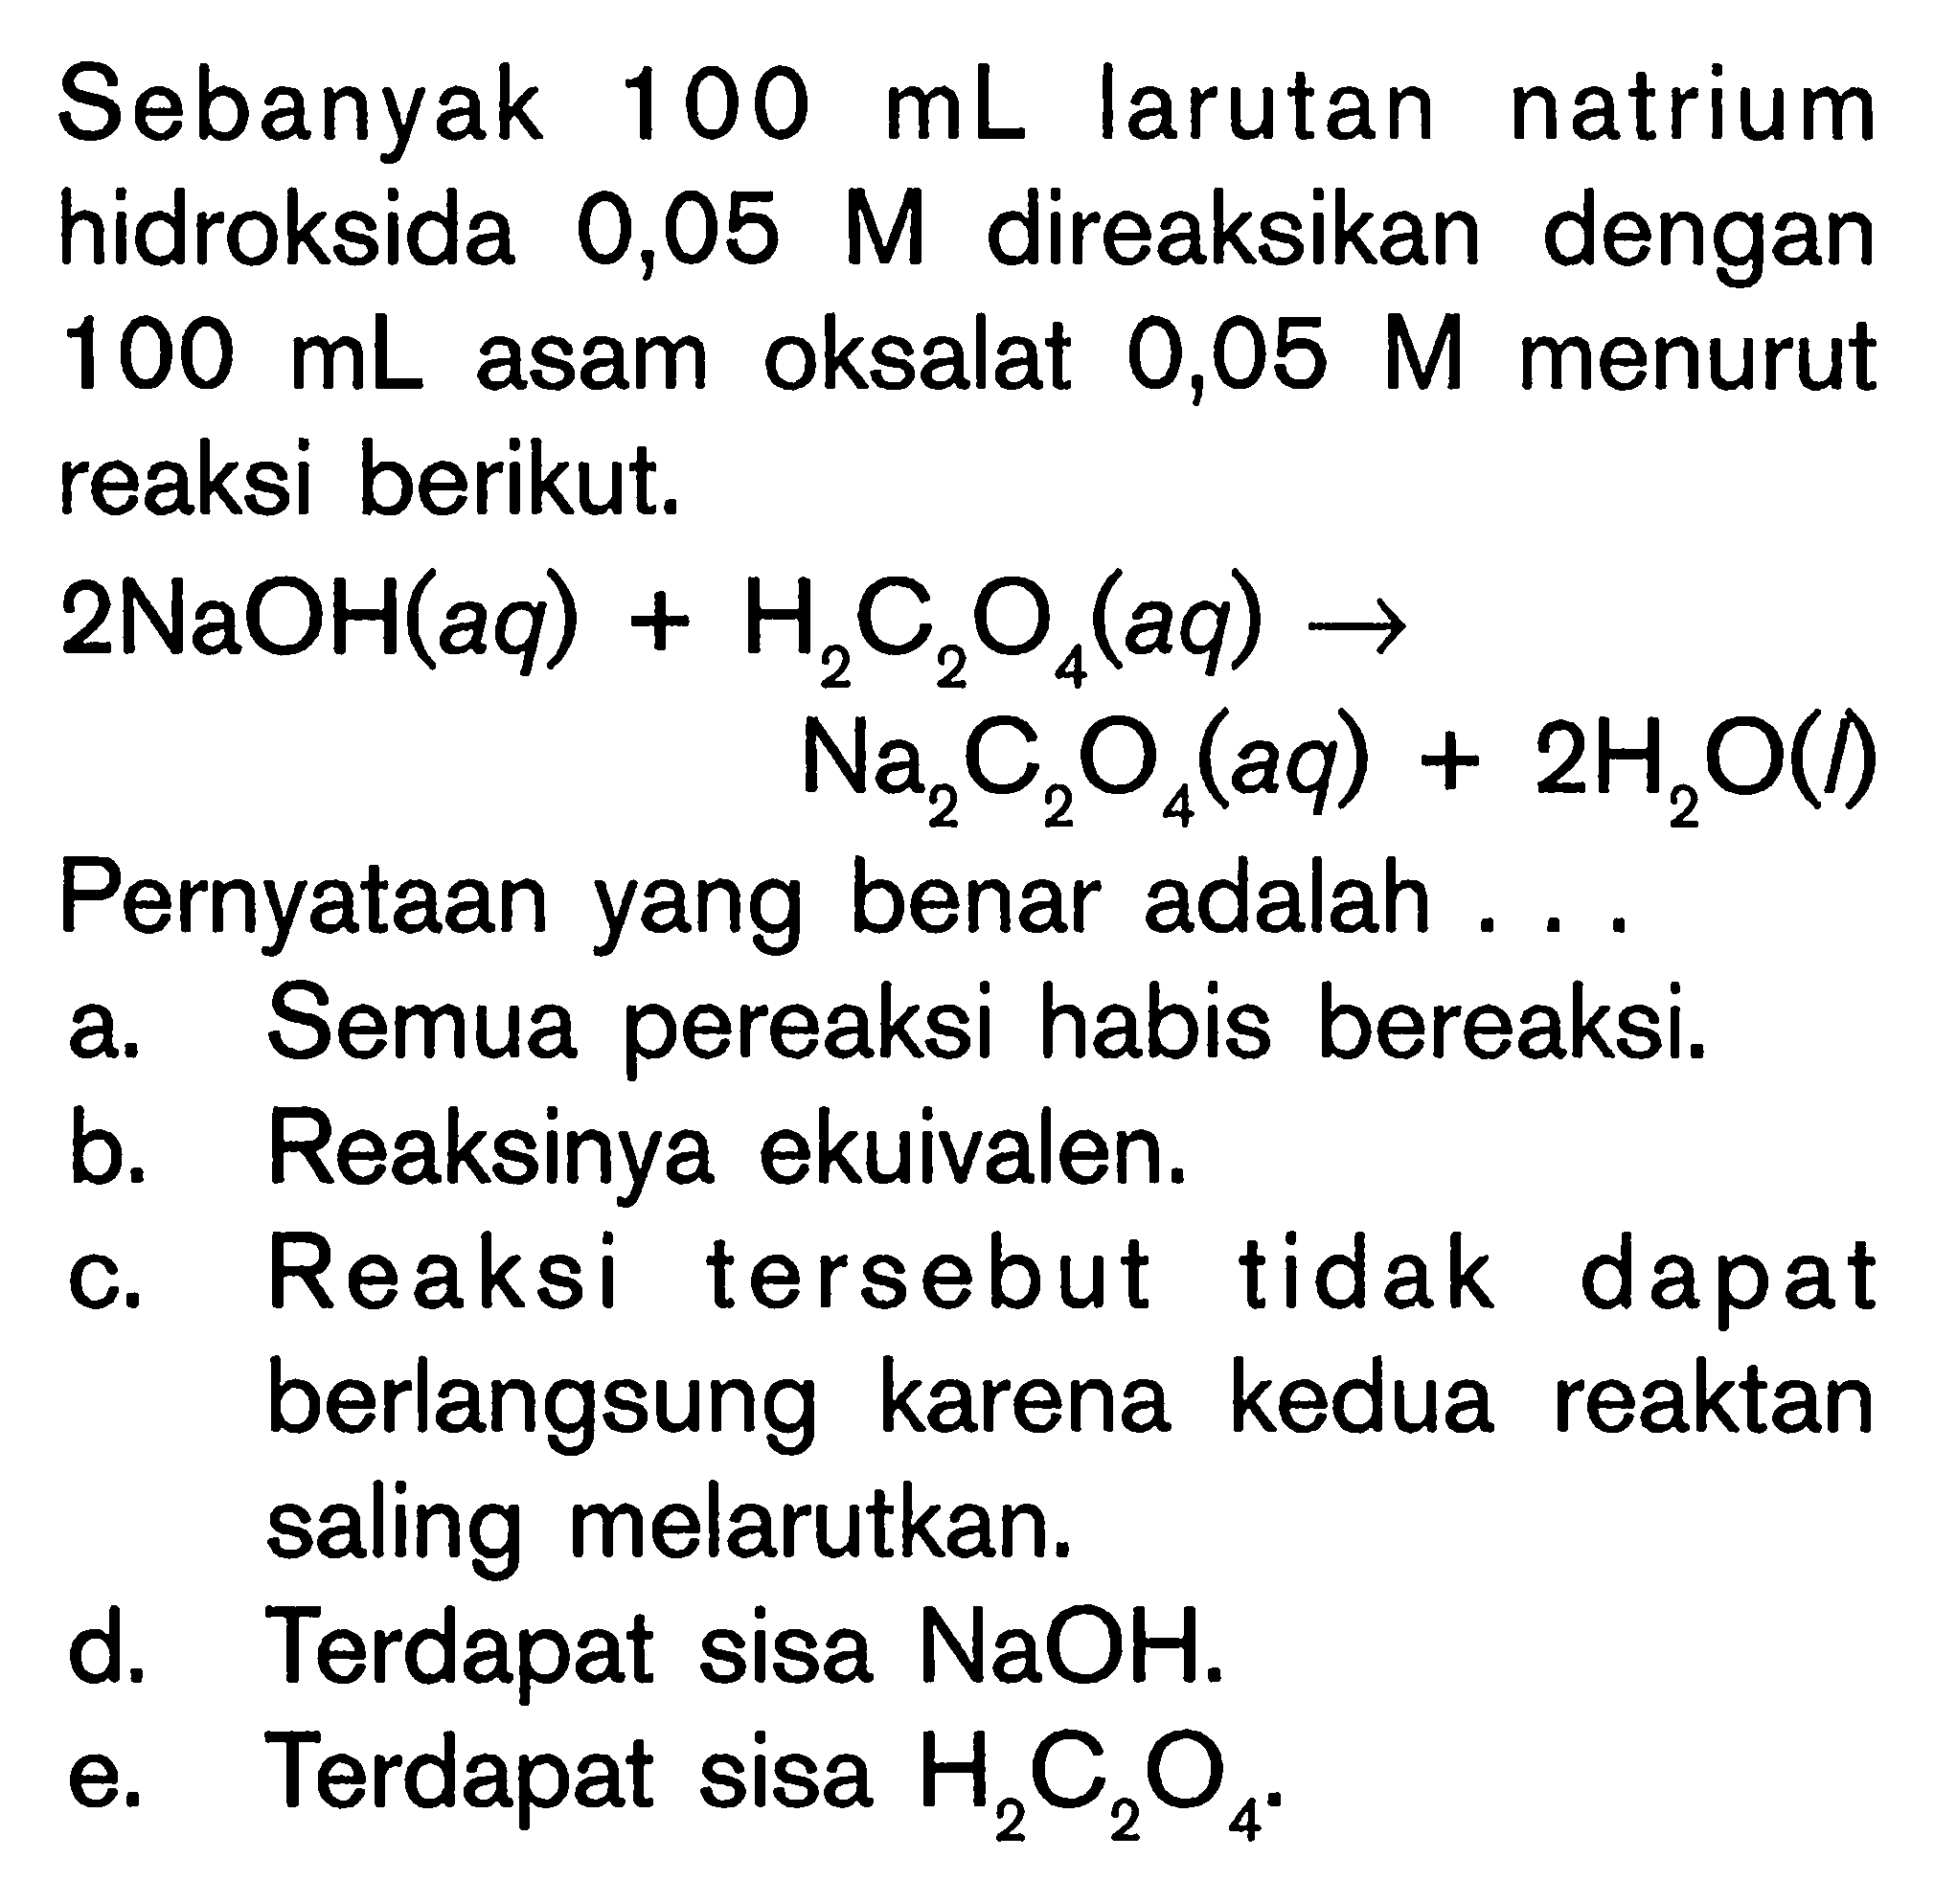 Sebanyak  100 mL  larutan natrium hidroksida  0,05 M  direaksikan dengan  100 mL  asam oksalat  0,05 M  menurut reaksi berikut.\beginaligned2 NaOH(aq)+ H2C2O4(aq) ->  Na2C2O4(aq)+2H2O(l)\endalignedPernyataan yang benar adalah ...